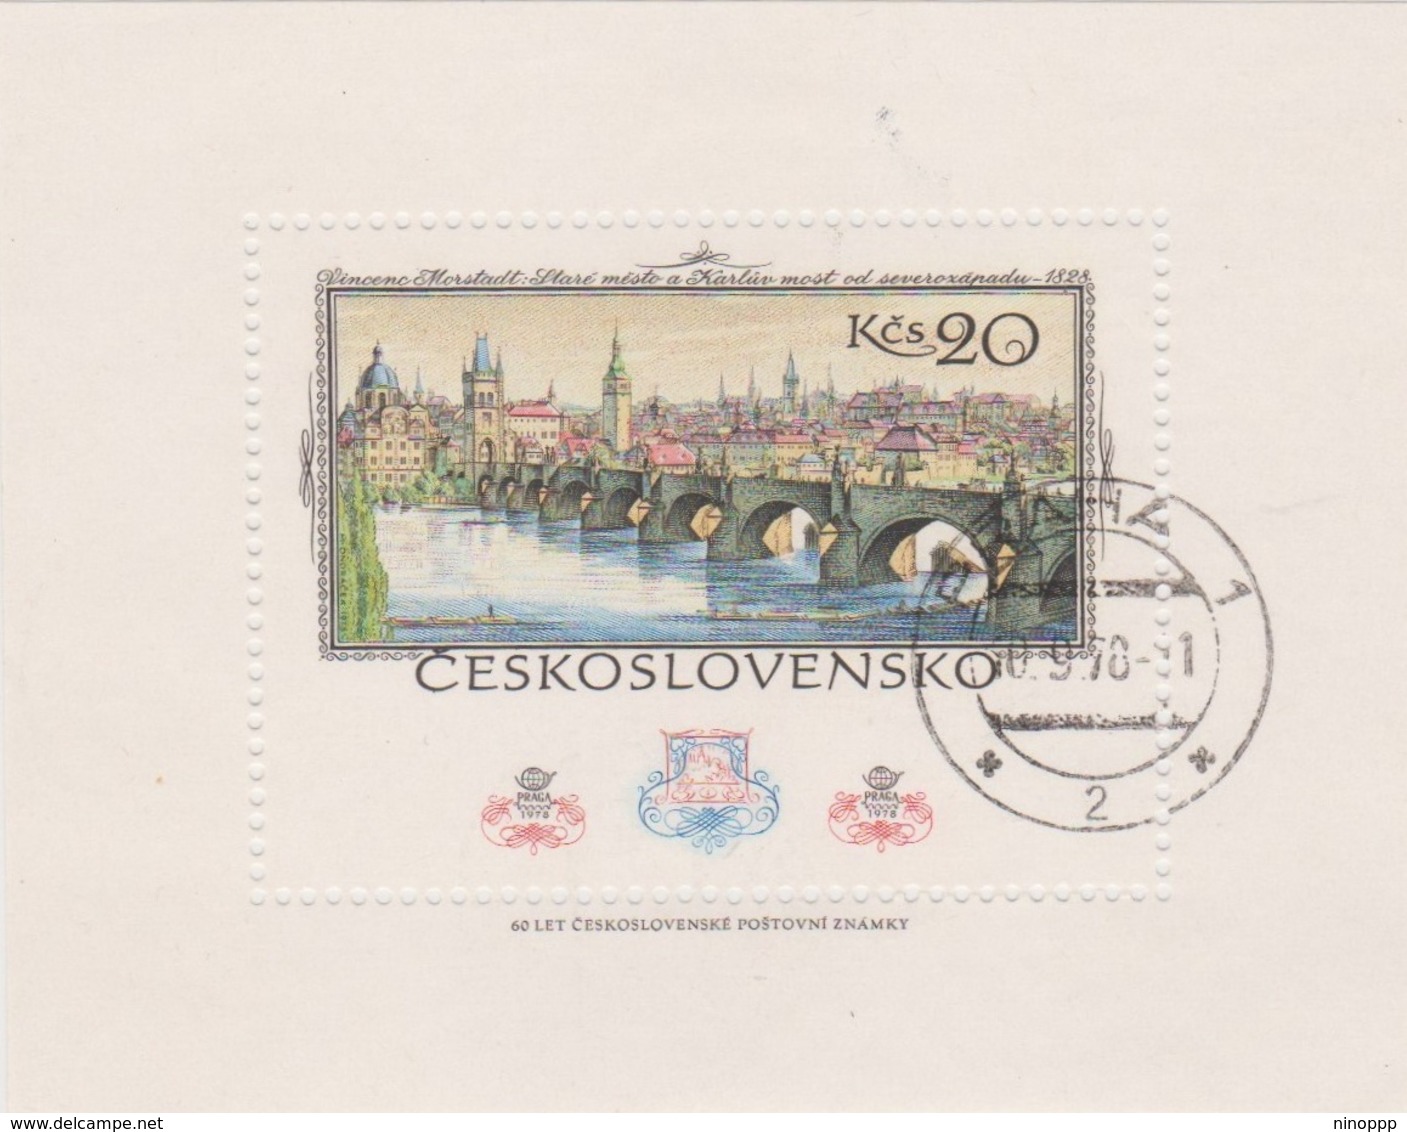 Czechoslovakia Scott 2196 1978 Praga International Stamp Expo, Souvenir Sheet, Used - Covers & Documents